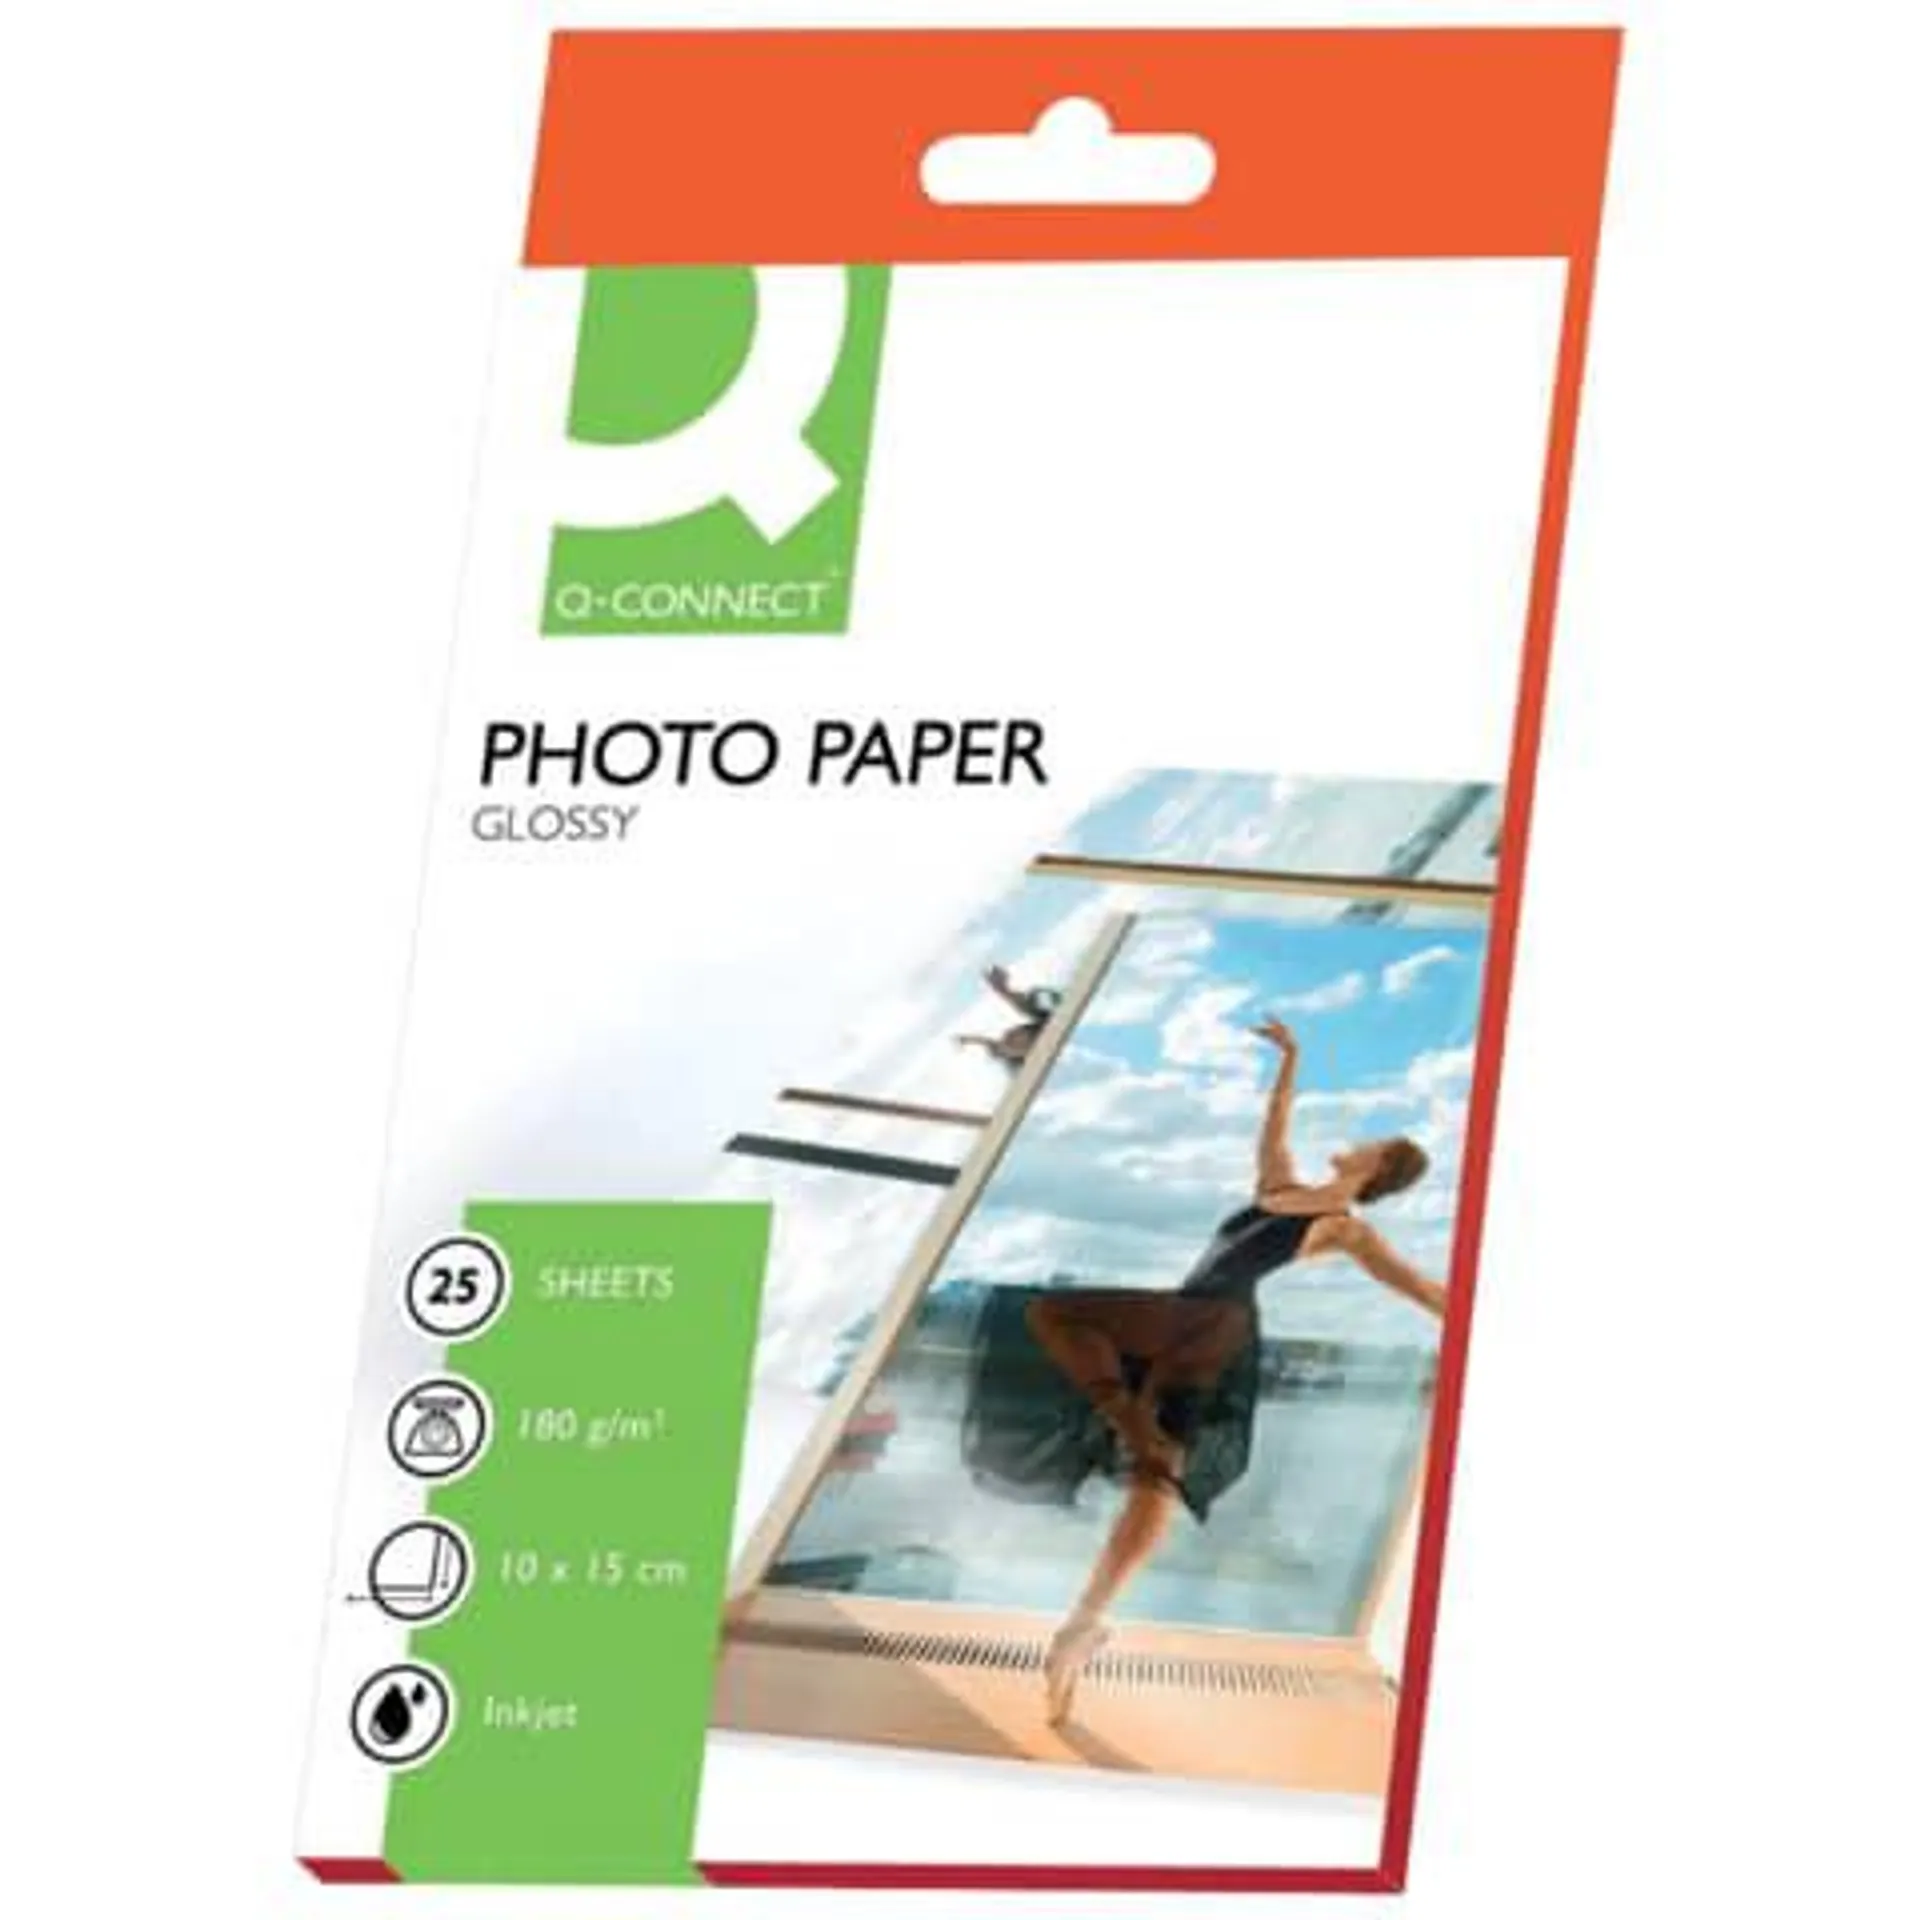 Inkjet Fotopapier 25 Blatt glänzen 10x15cm 180g Q-CONNECT KF01905